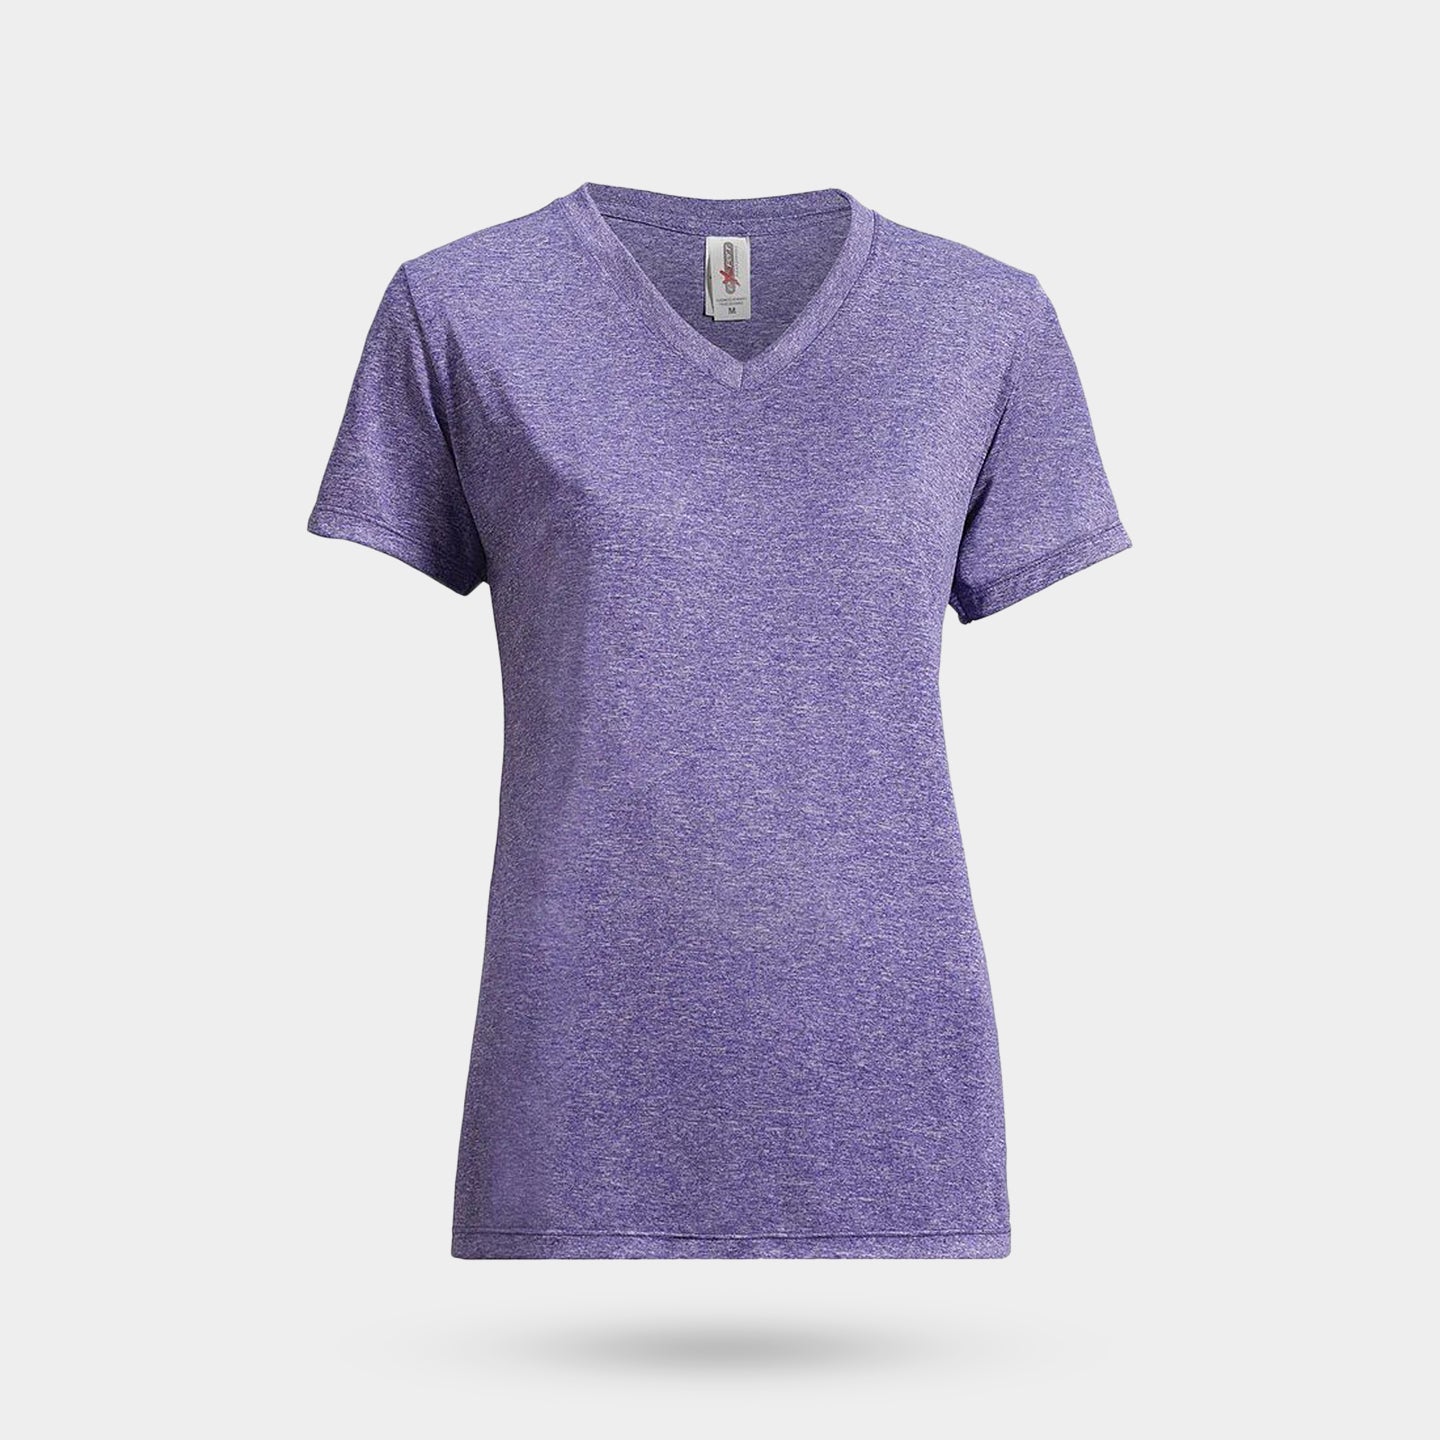 Expert Brand Women's Heather Natural Feel Performance T-Shirt, M, Heather Purple A1